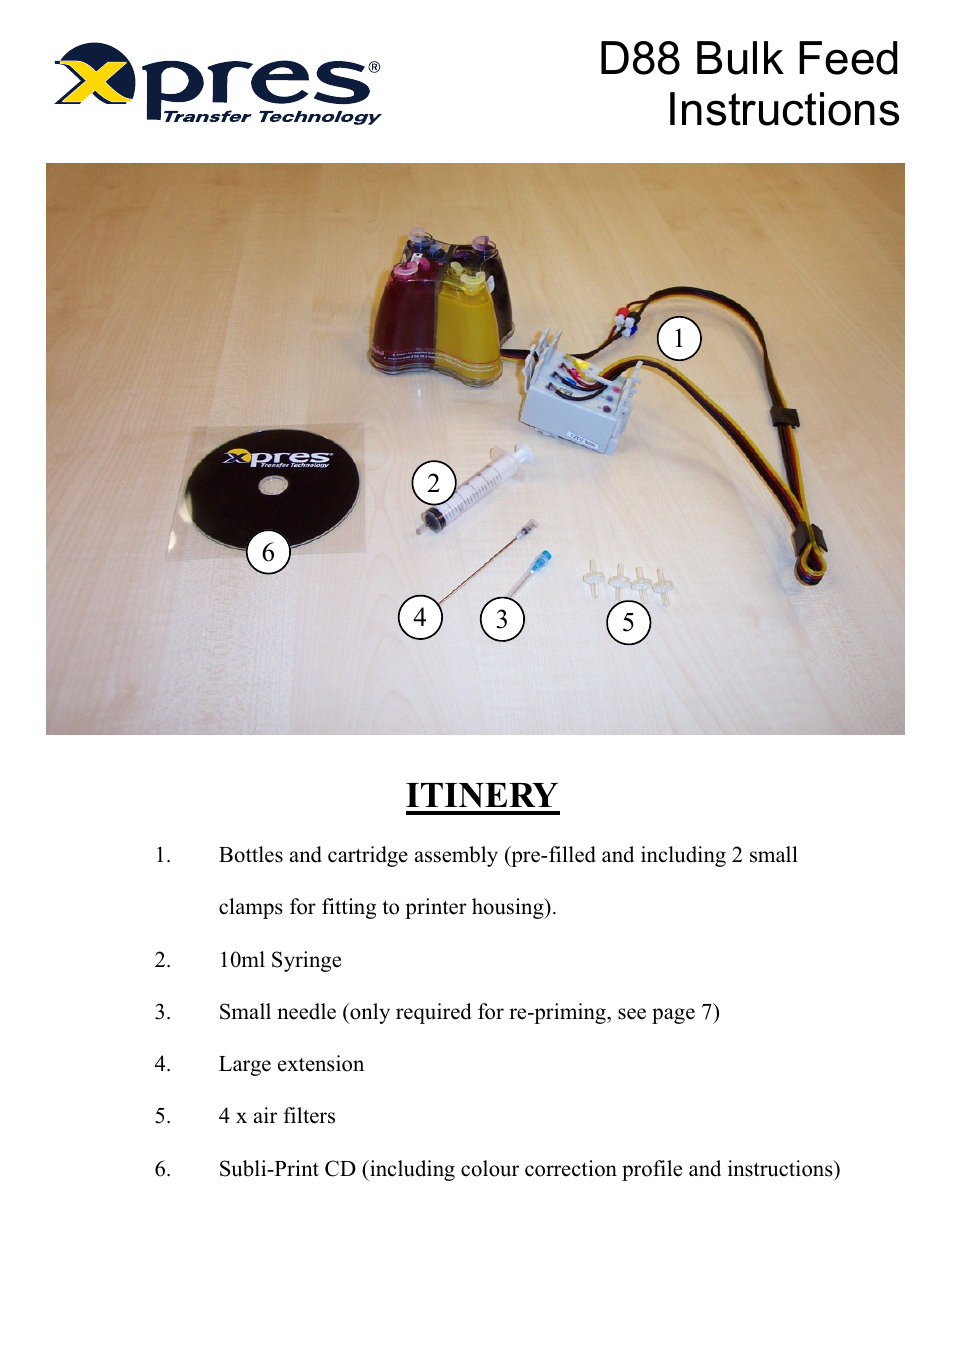 Subli-Print Epson D88: Bulk Feed Instructions (new series 4)